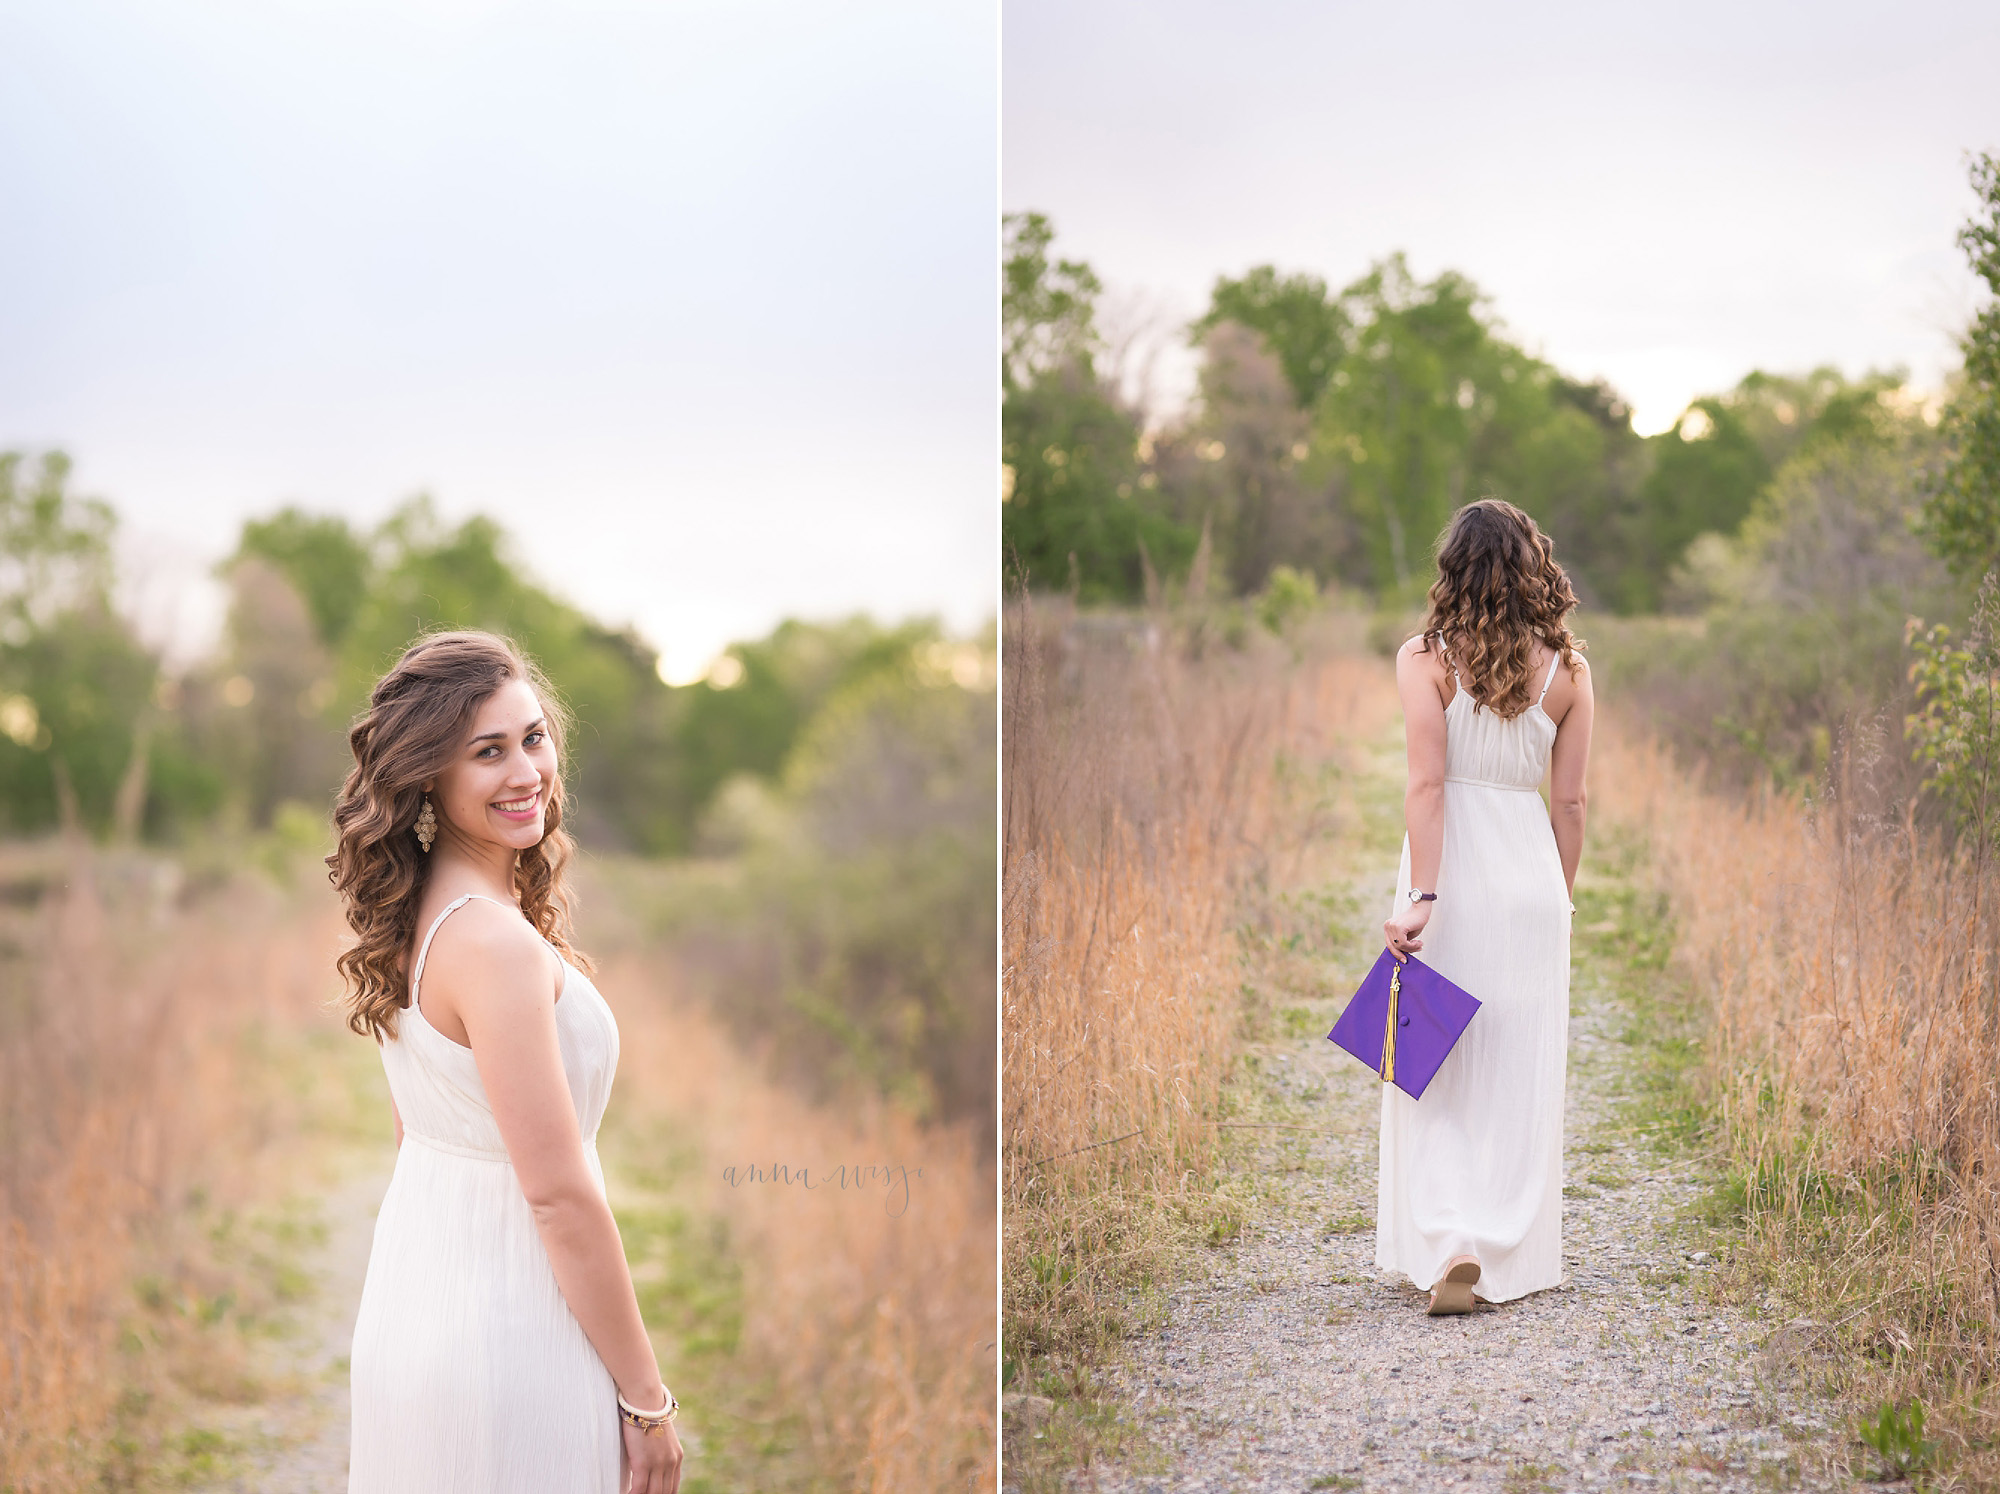 Nicole | Mooresville Graduation Photographer